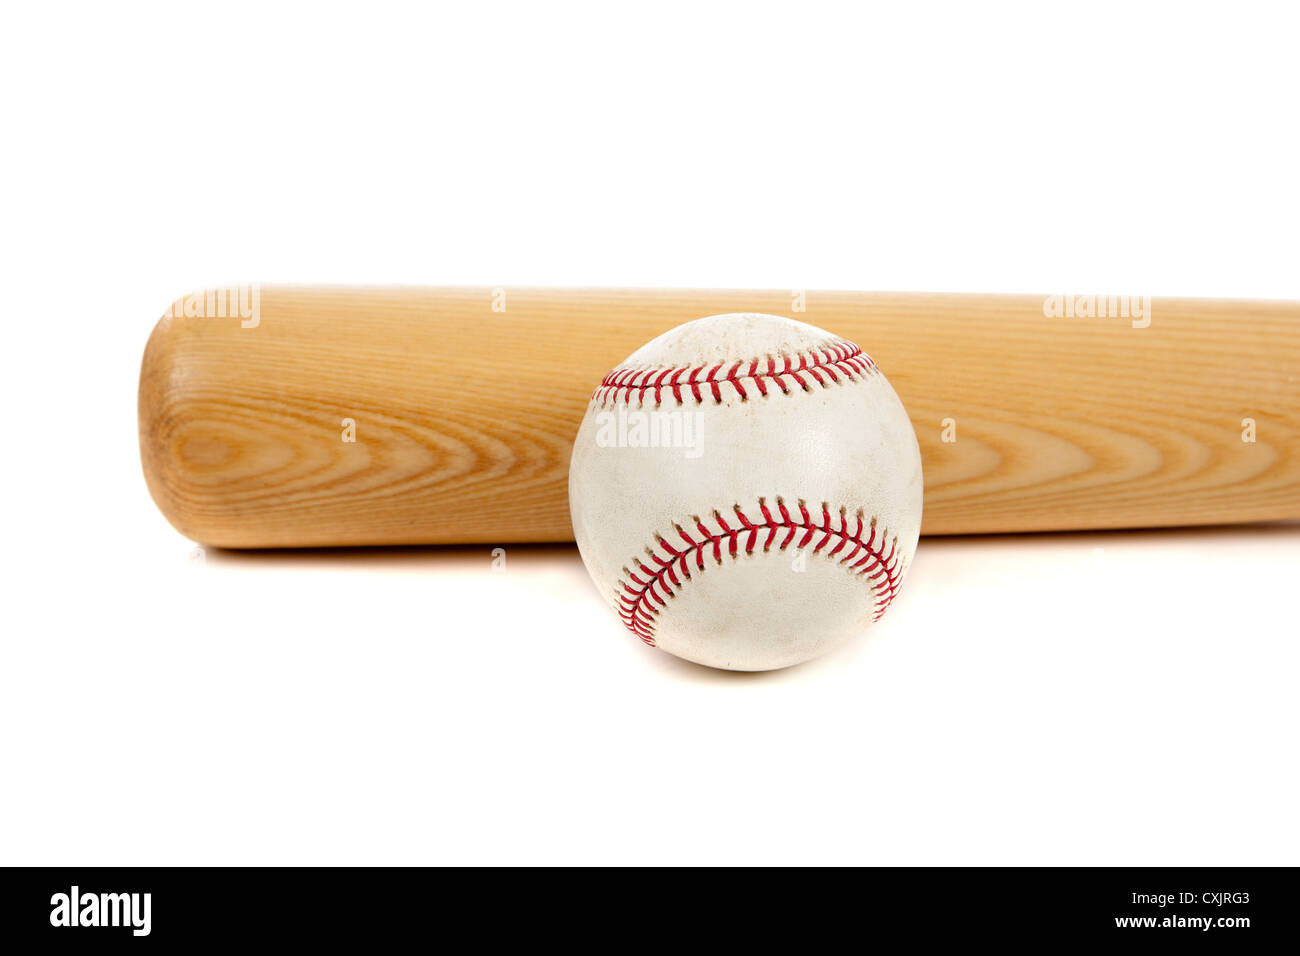 Una pelota de béisbol y el bate de madera sobre un fondo blanco. Foto de stock